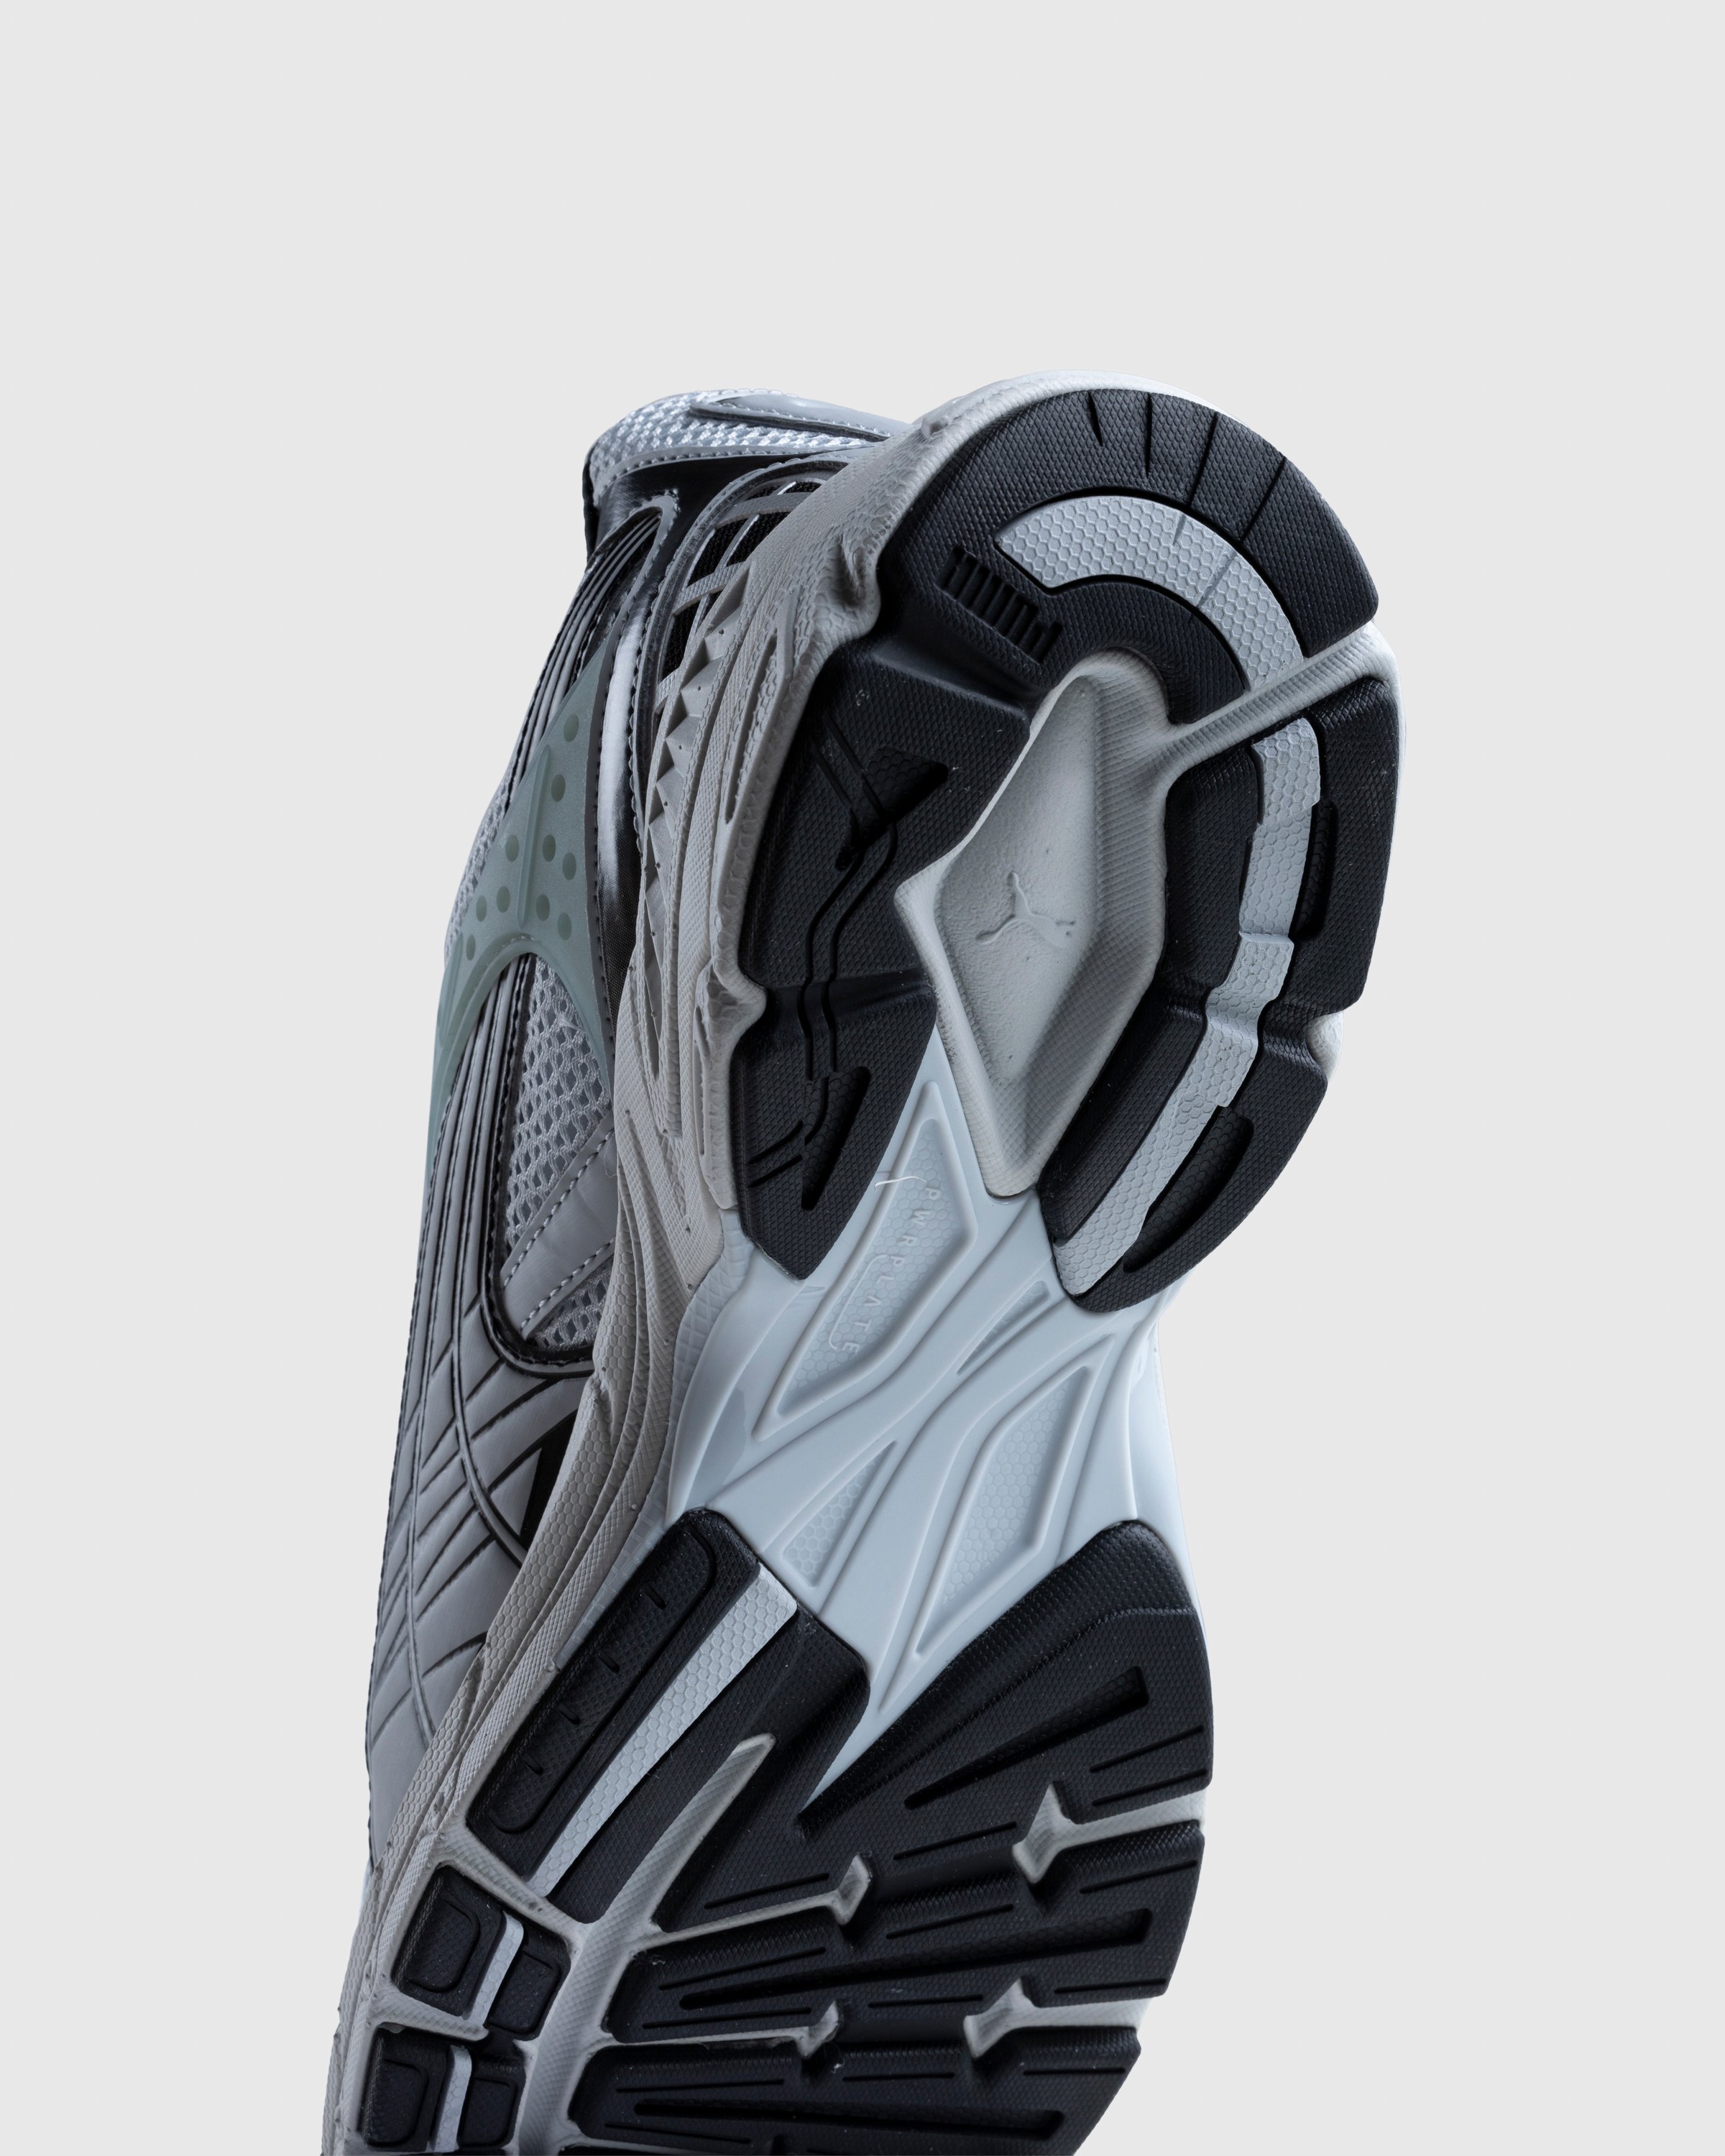 Puma - Velophasis Technisch Grey - Footwear - Grey - Image 6